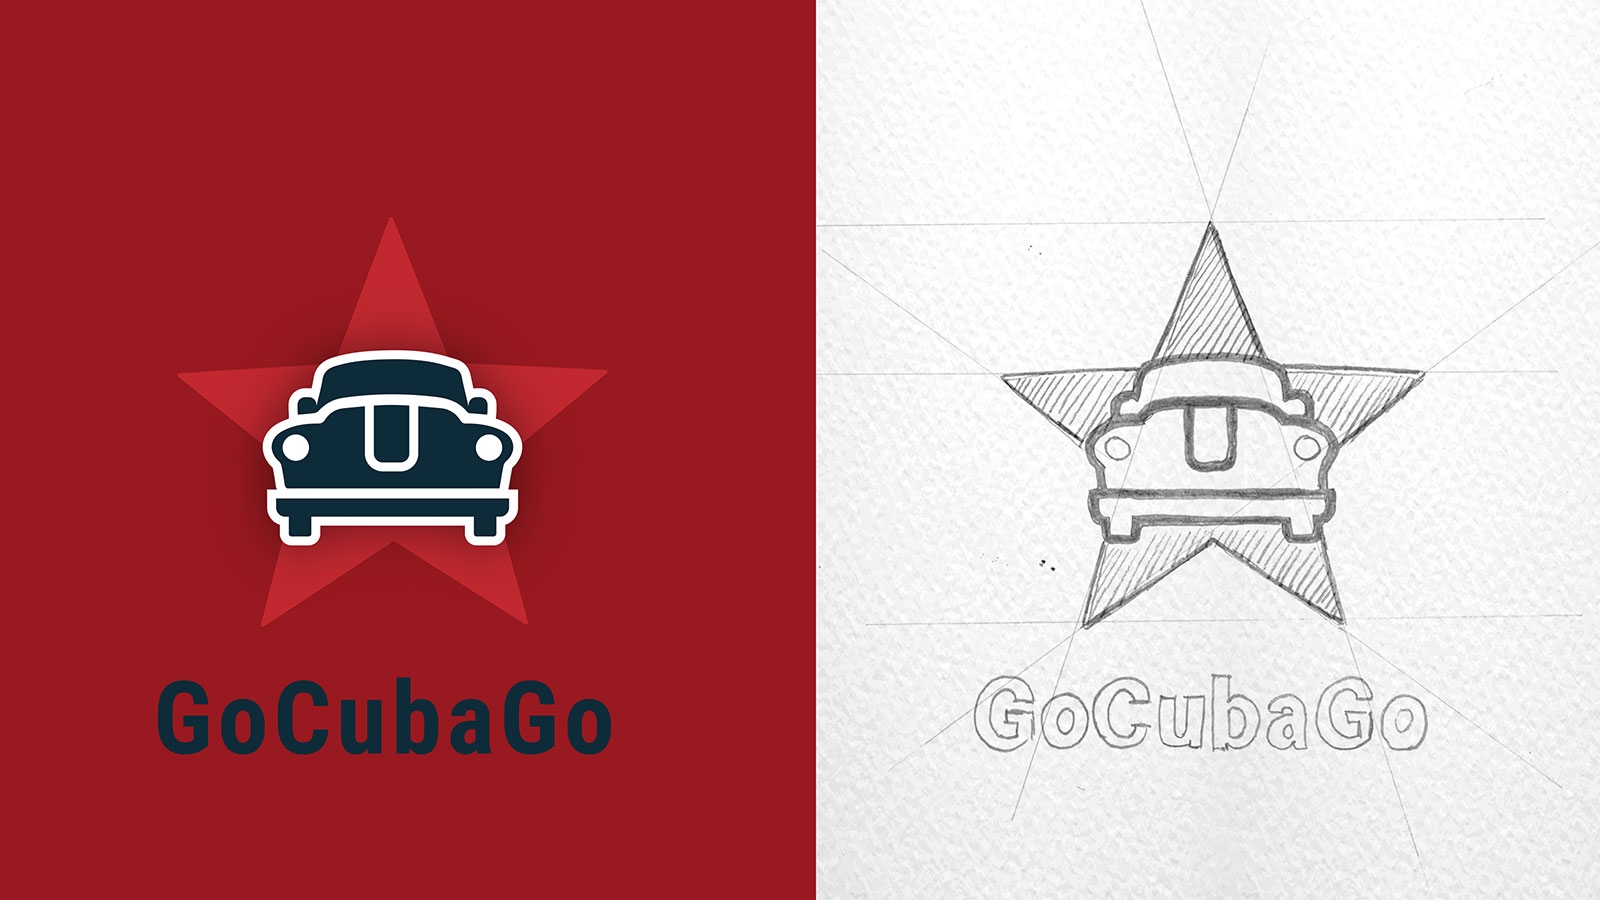 Go Cuba Go | gocubago.com | 2018 (Logo + Scribble) © echonet communication GmbH